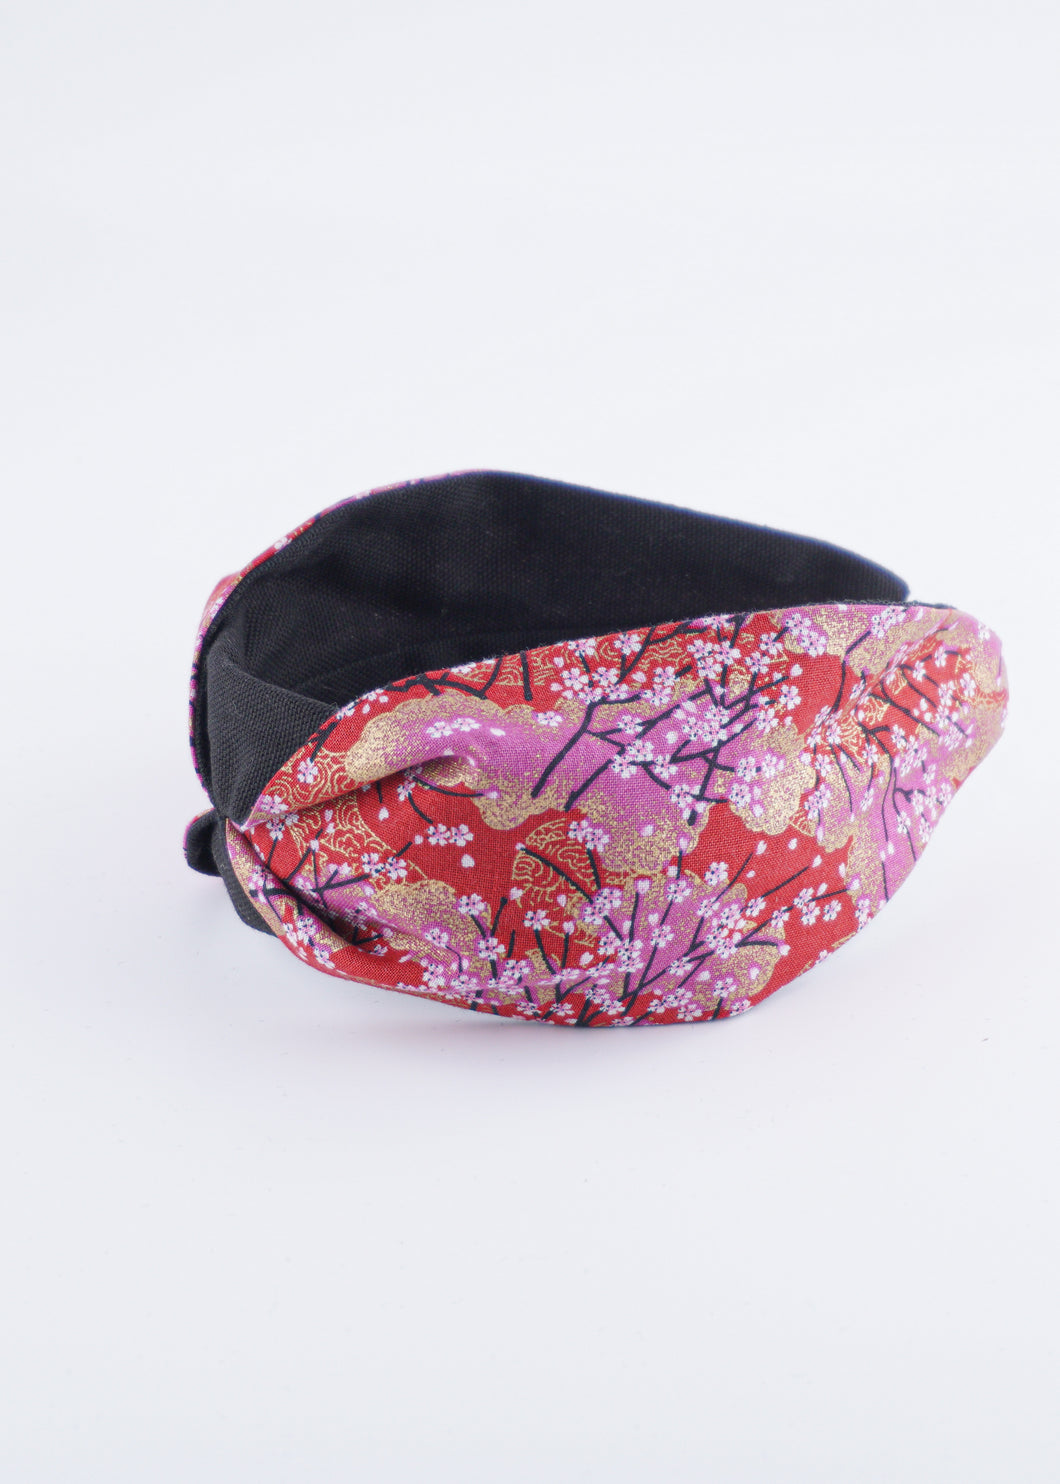 Headband red cherry blossom pattern